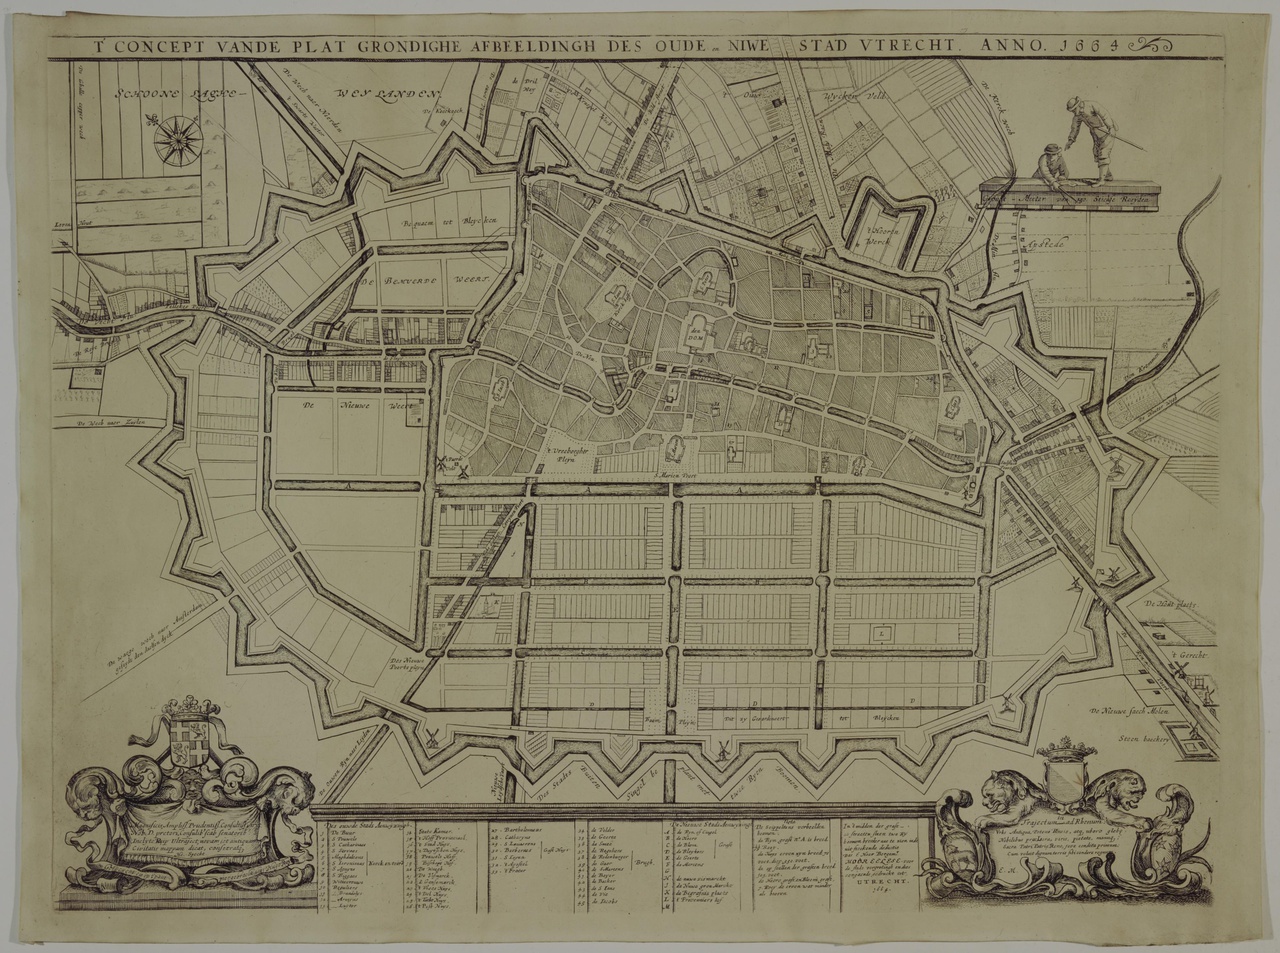 T' Concept vande plat grondighe afbeeldingh des oude en niwe stad Utrecht. Anno 1664